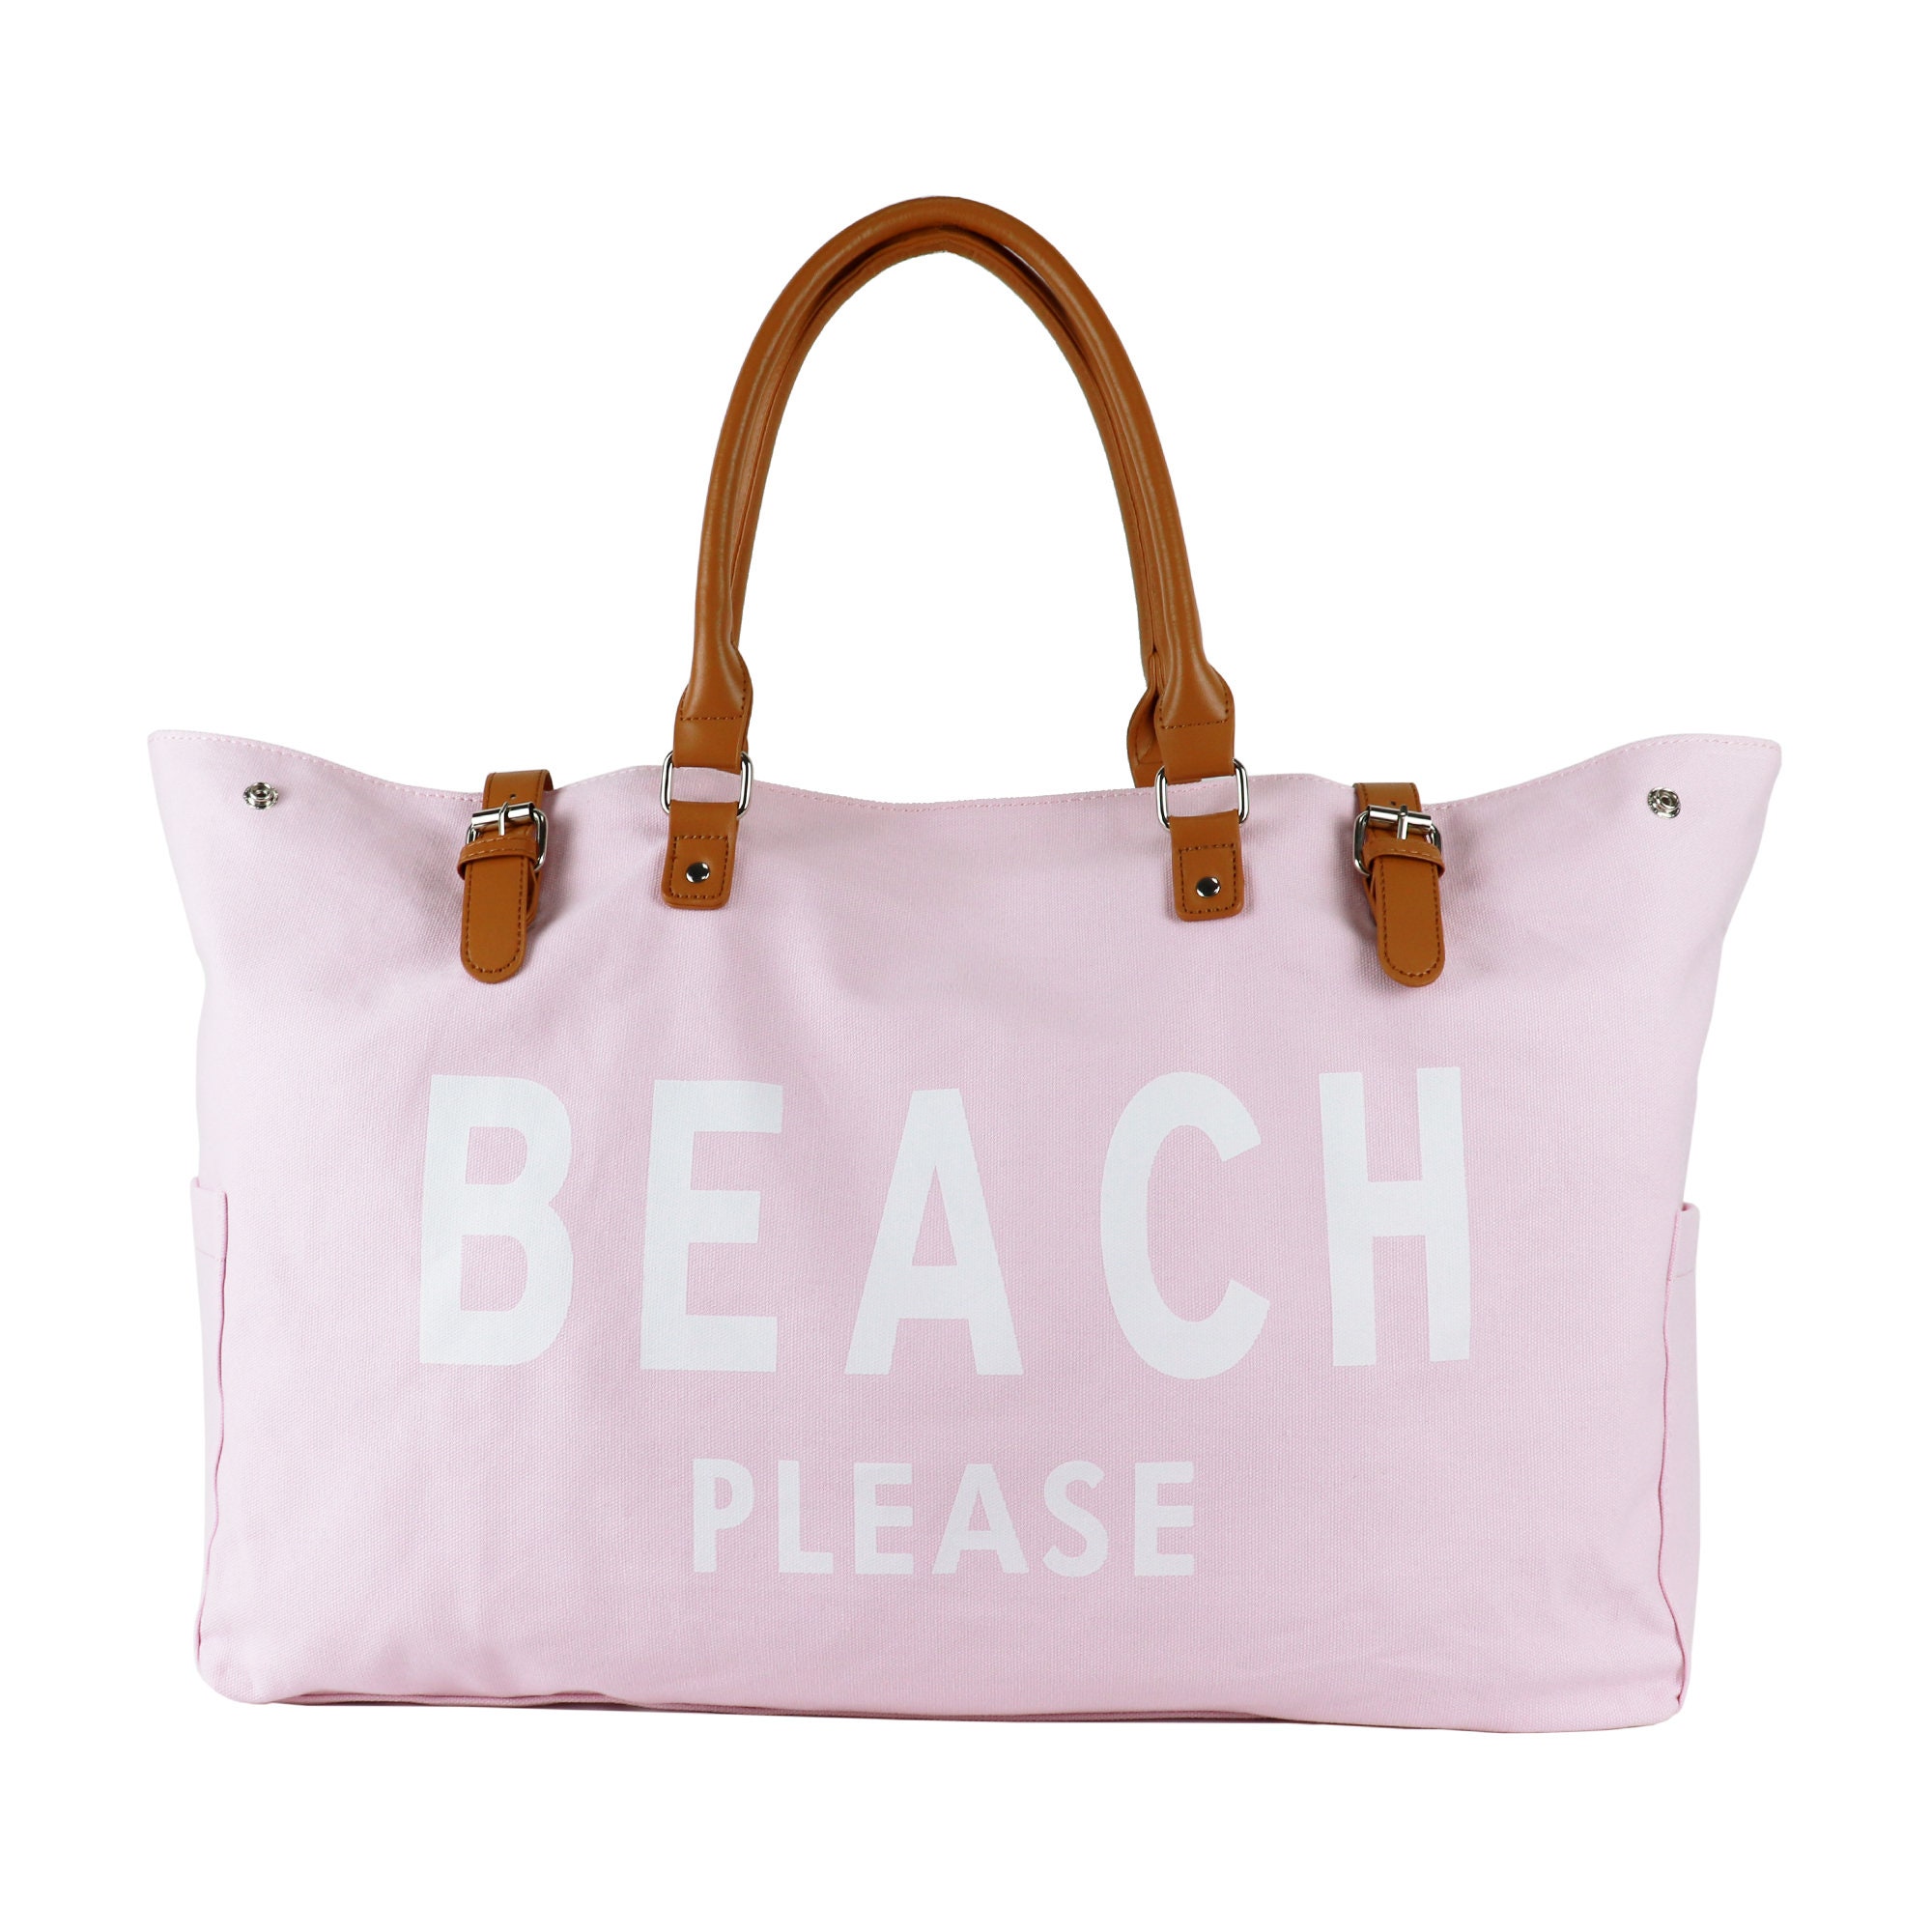 LMKIDS Woven Bag for Women, Vegan Leather Tote Bag Large Summer Beach Travel Handbag and Purse Retro Handmade Shoulder Bag